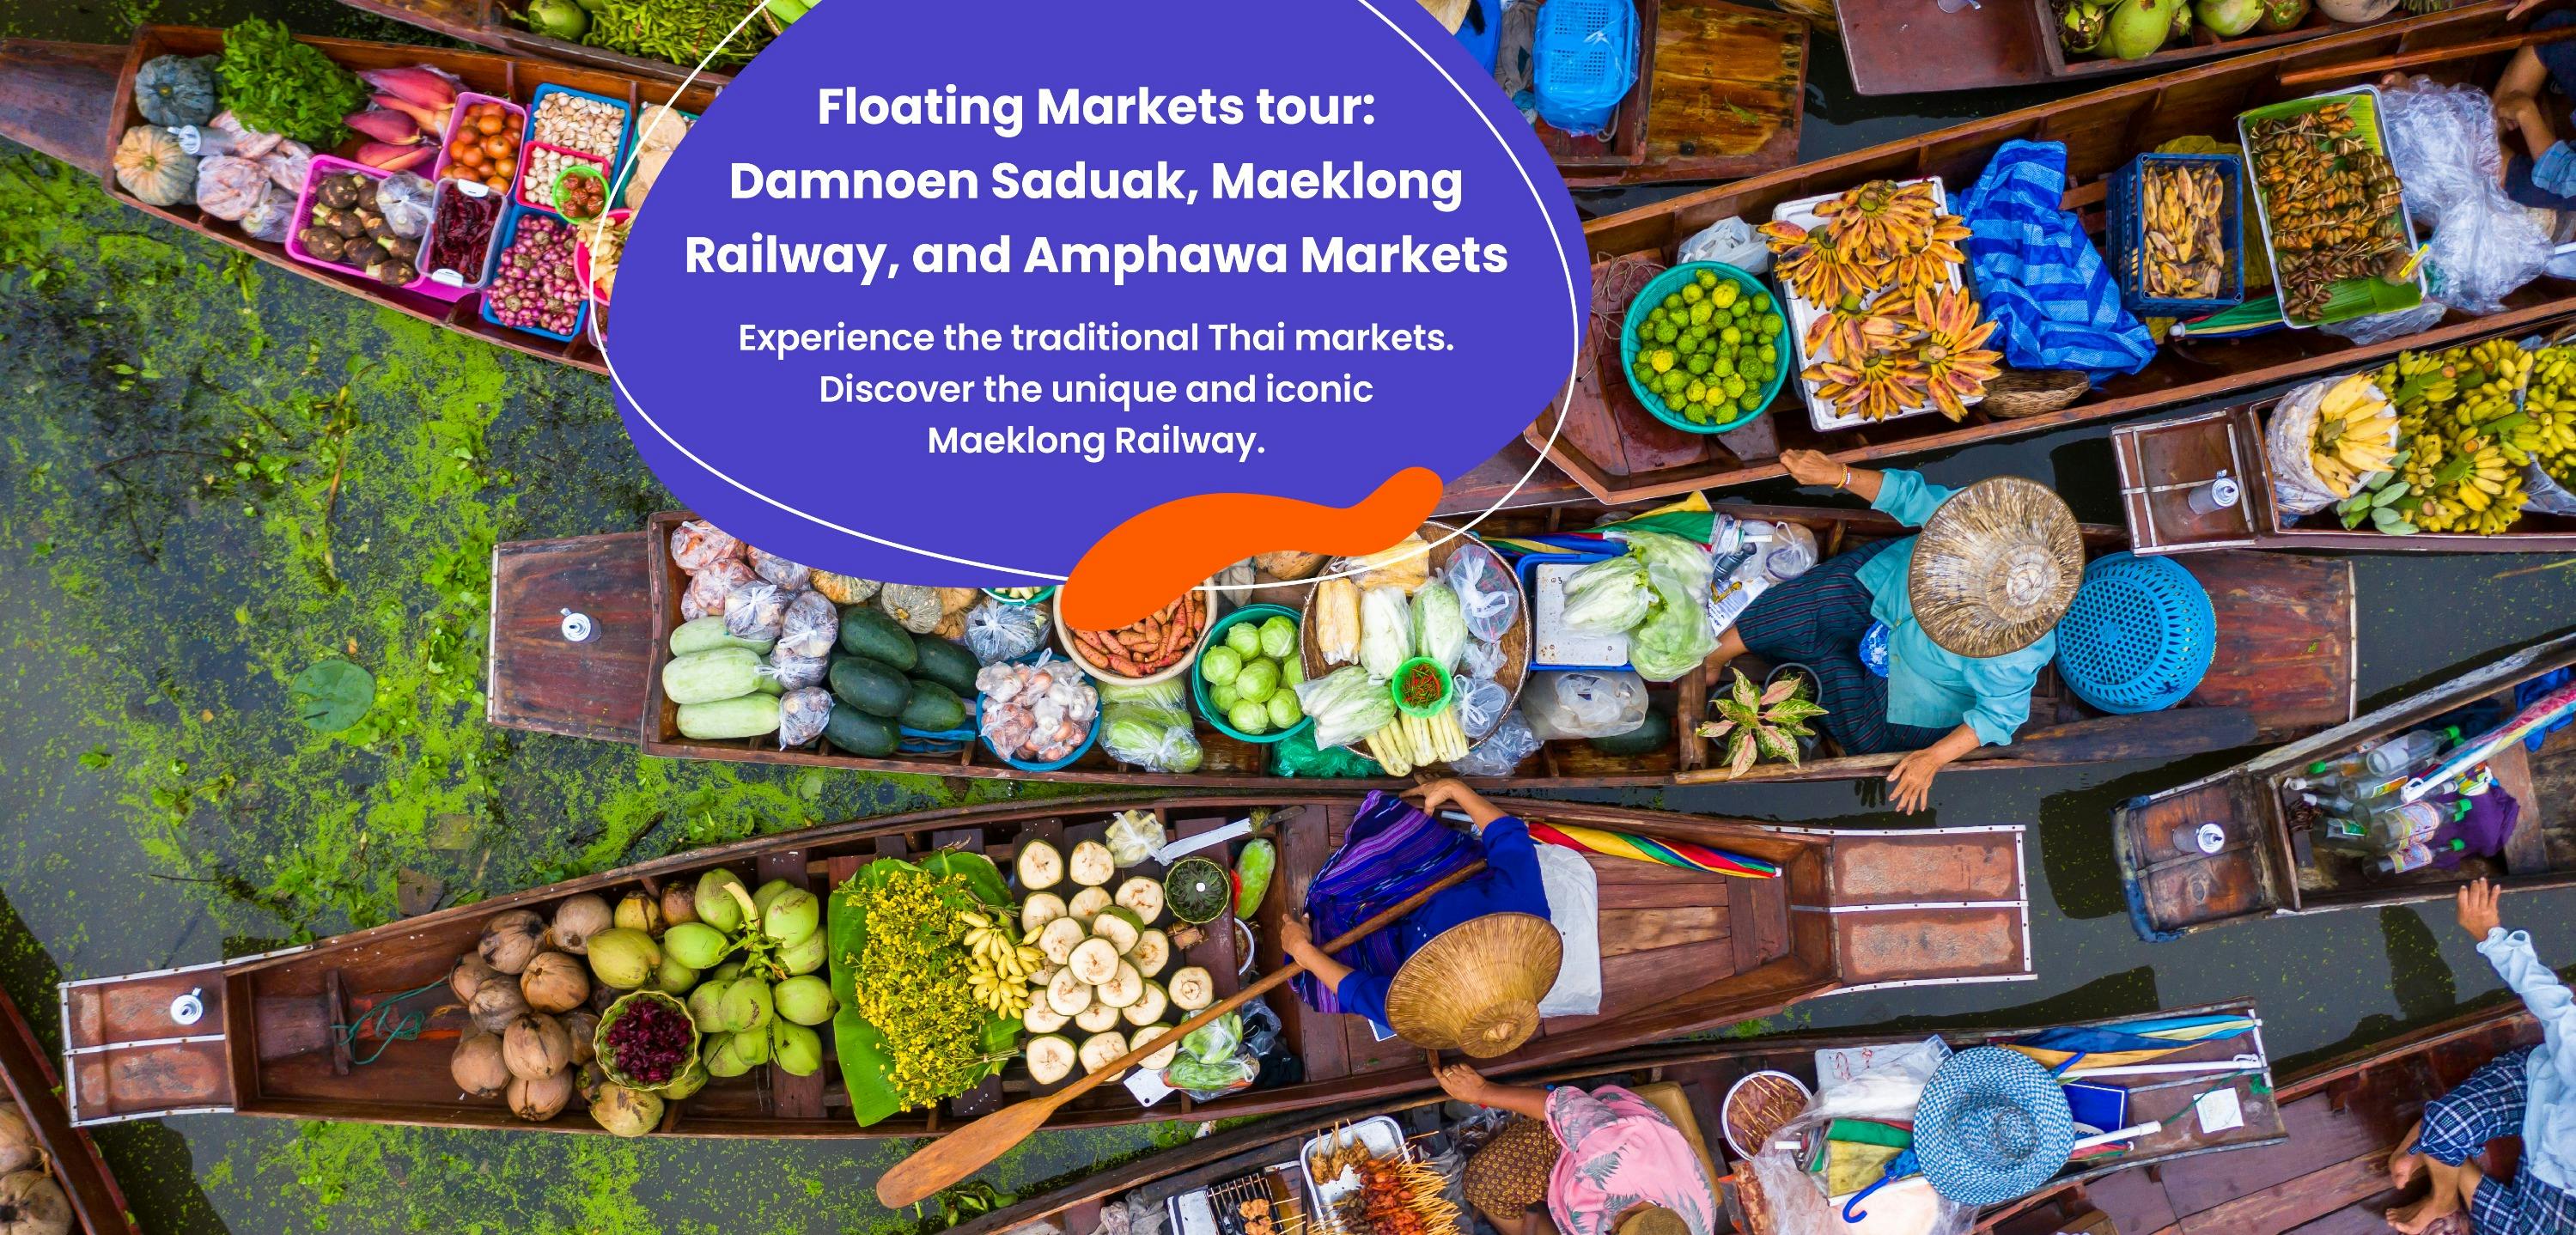 Imagen del tour: Excursión de un día por los mercados flotantes tailandeses: Damnoen Saduak, Maeklong y Amphawa